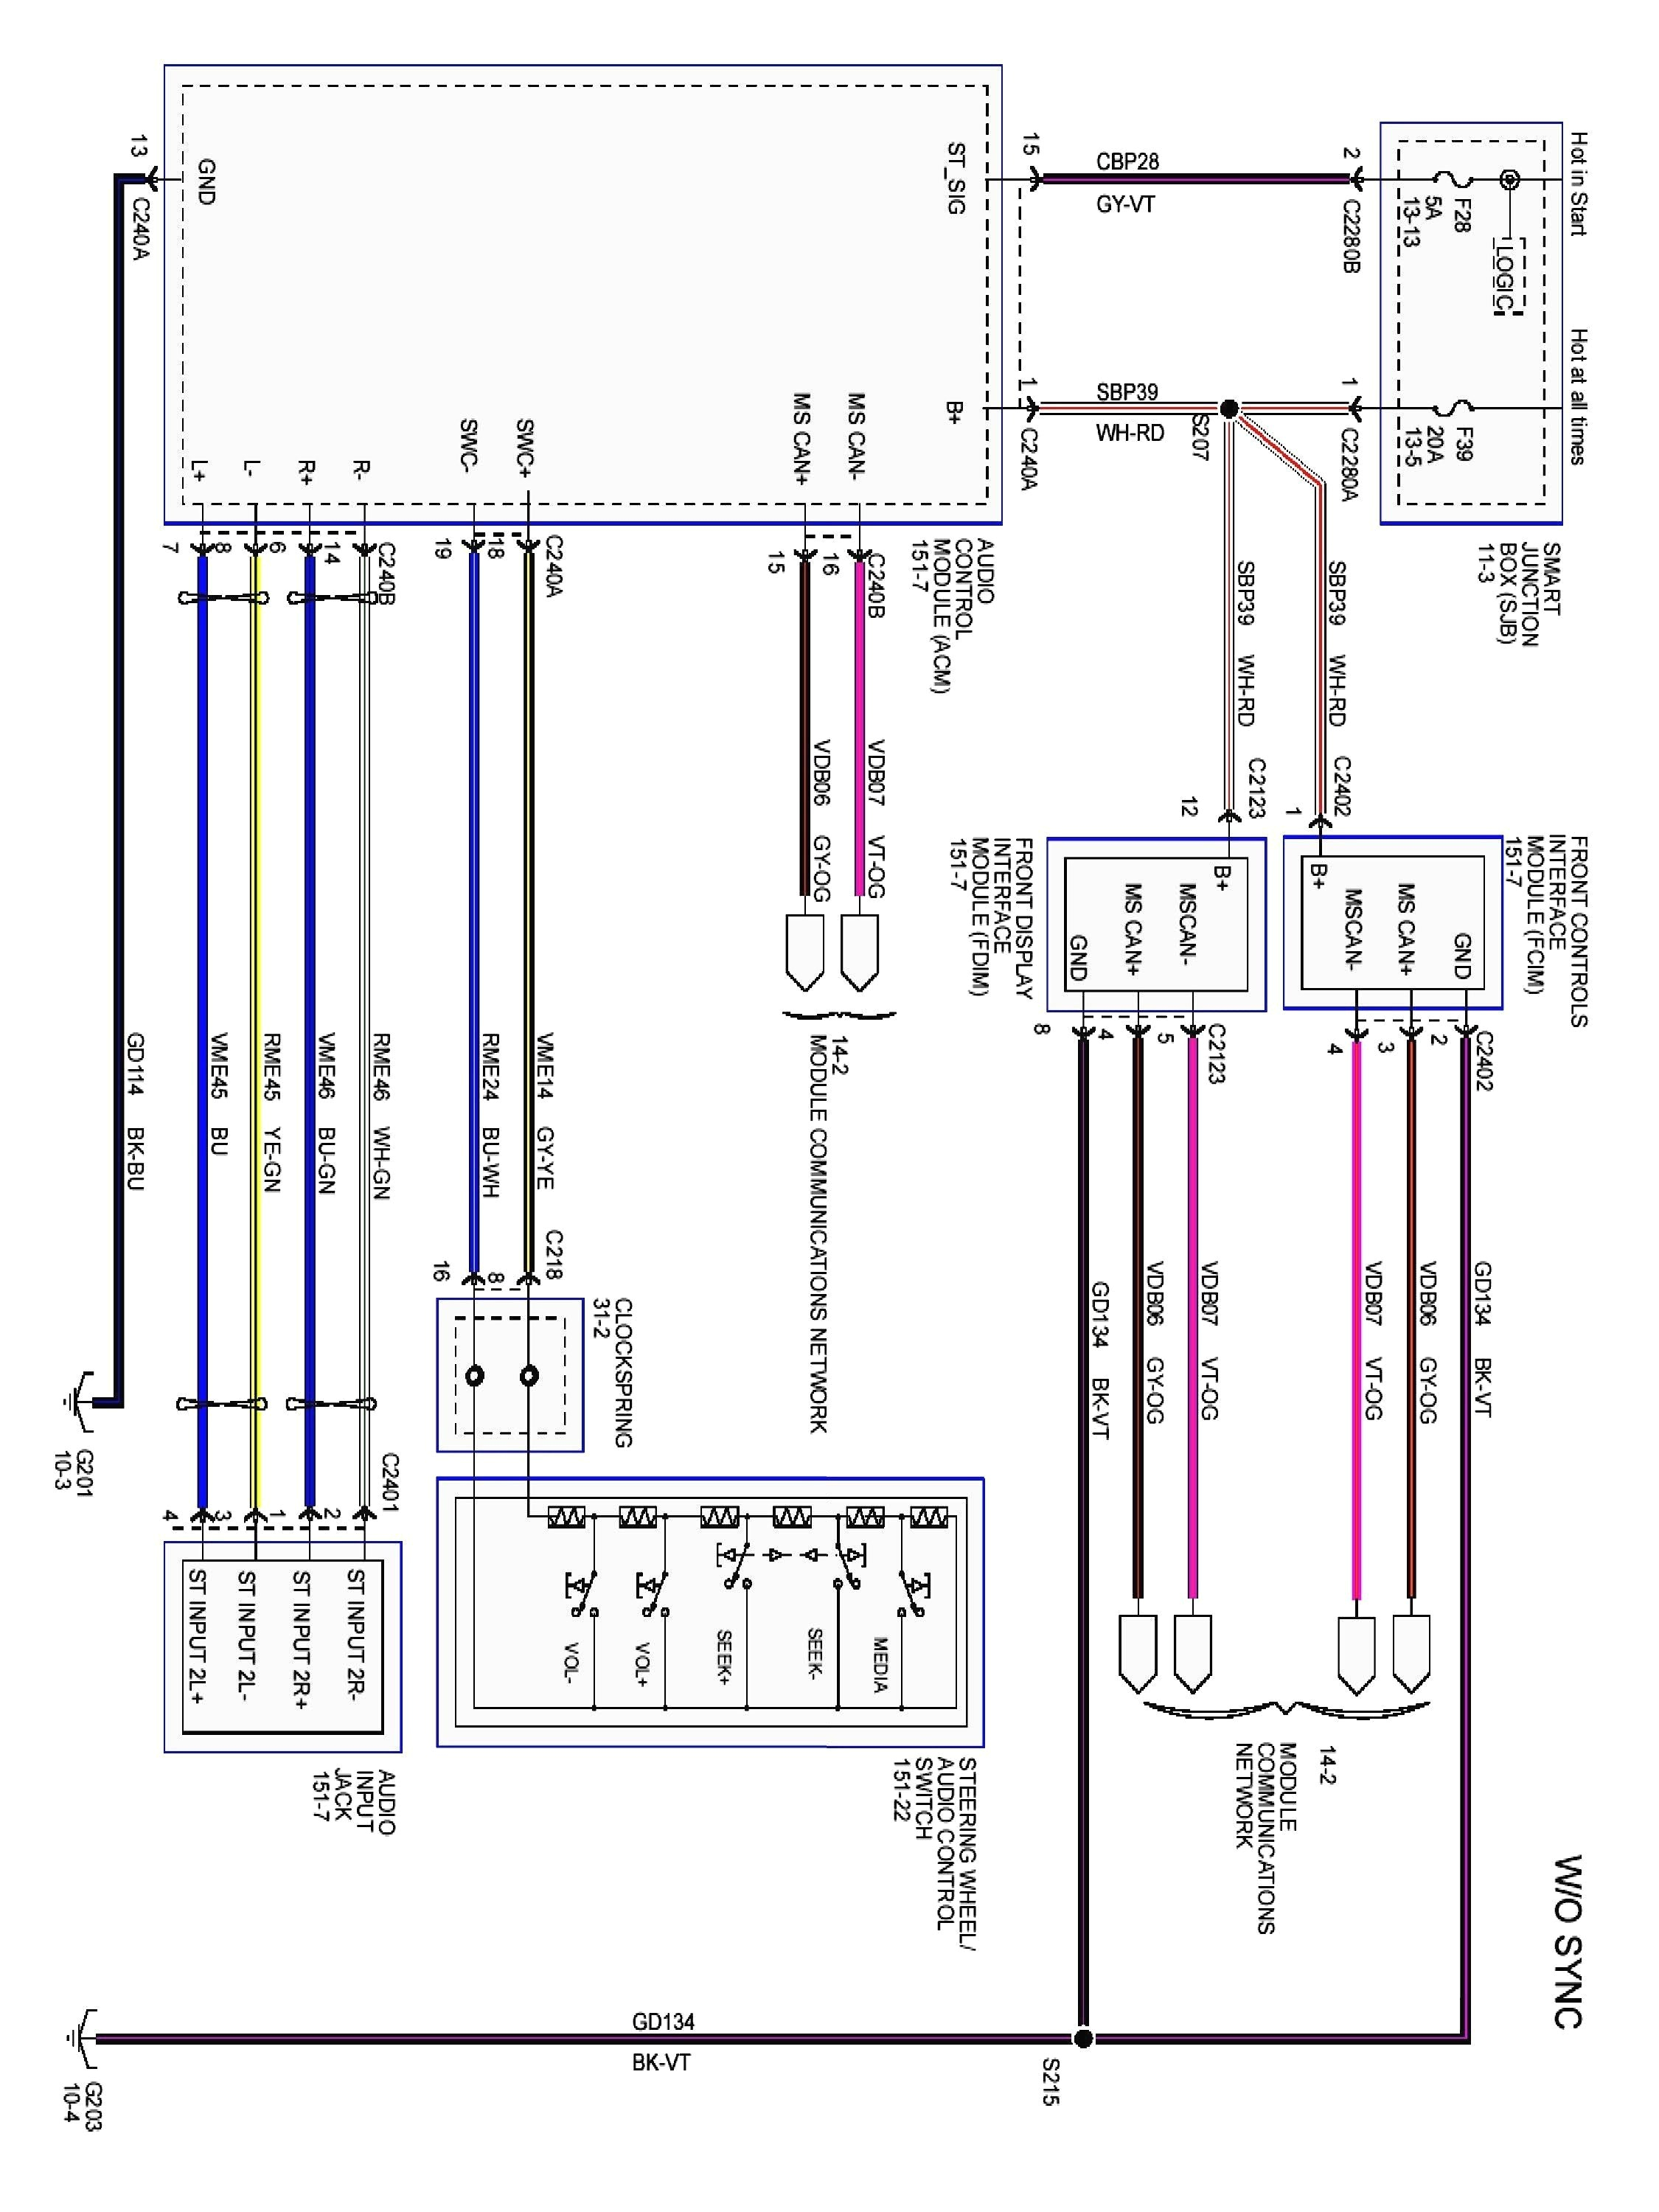 wiring diagram 2000 ford focus zetec wiring diagram post02 focus wiring schematic wiring diagram schematic 2000